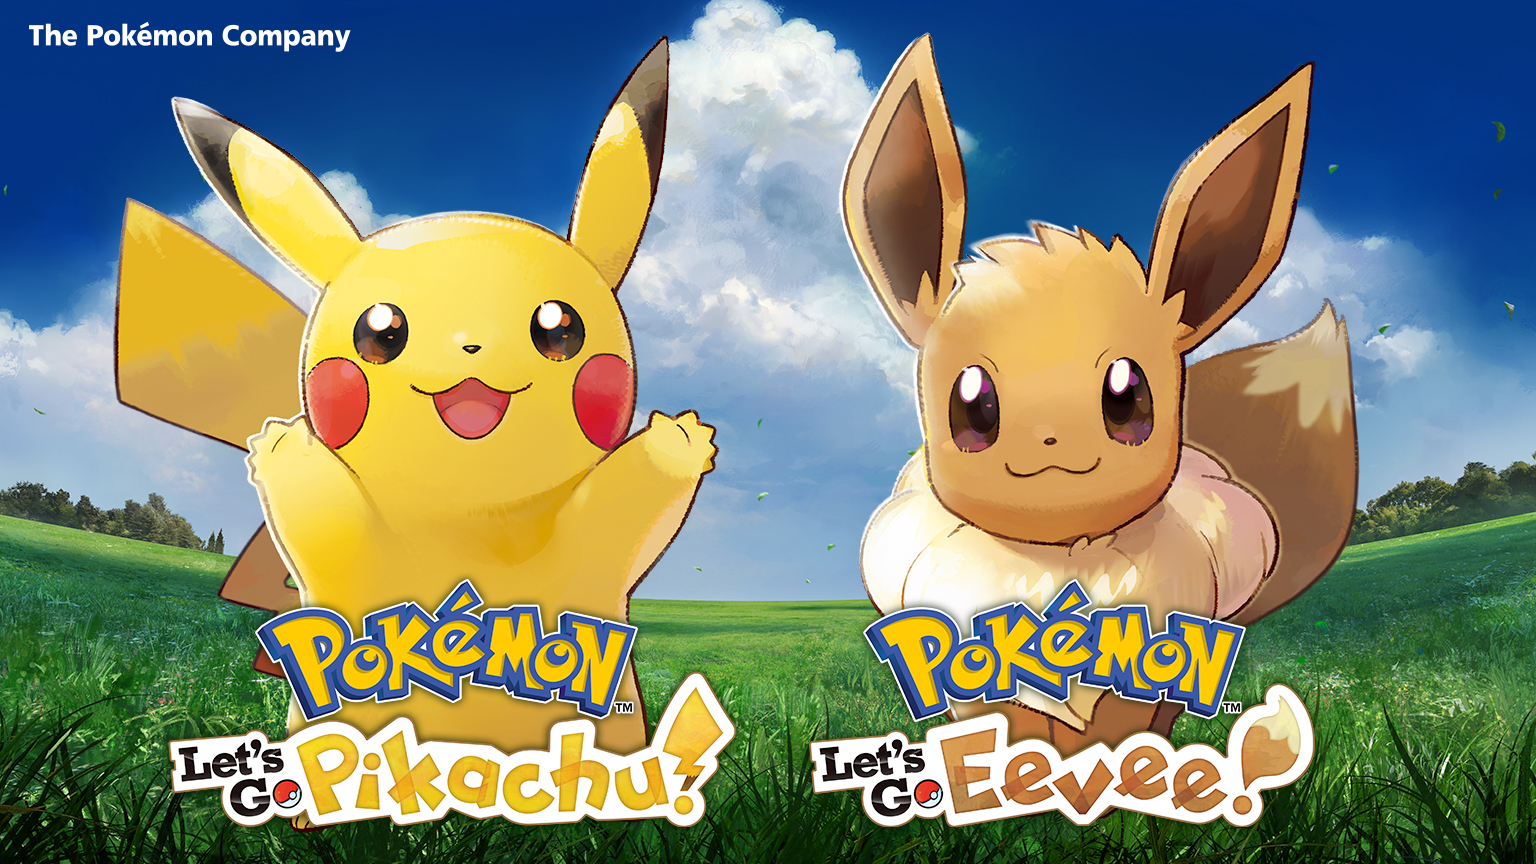 Pokémon_Let's Go, Pikachu and Eevee!